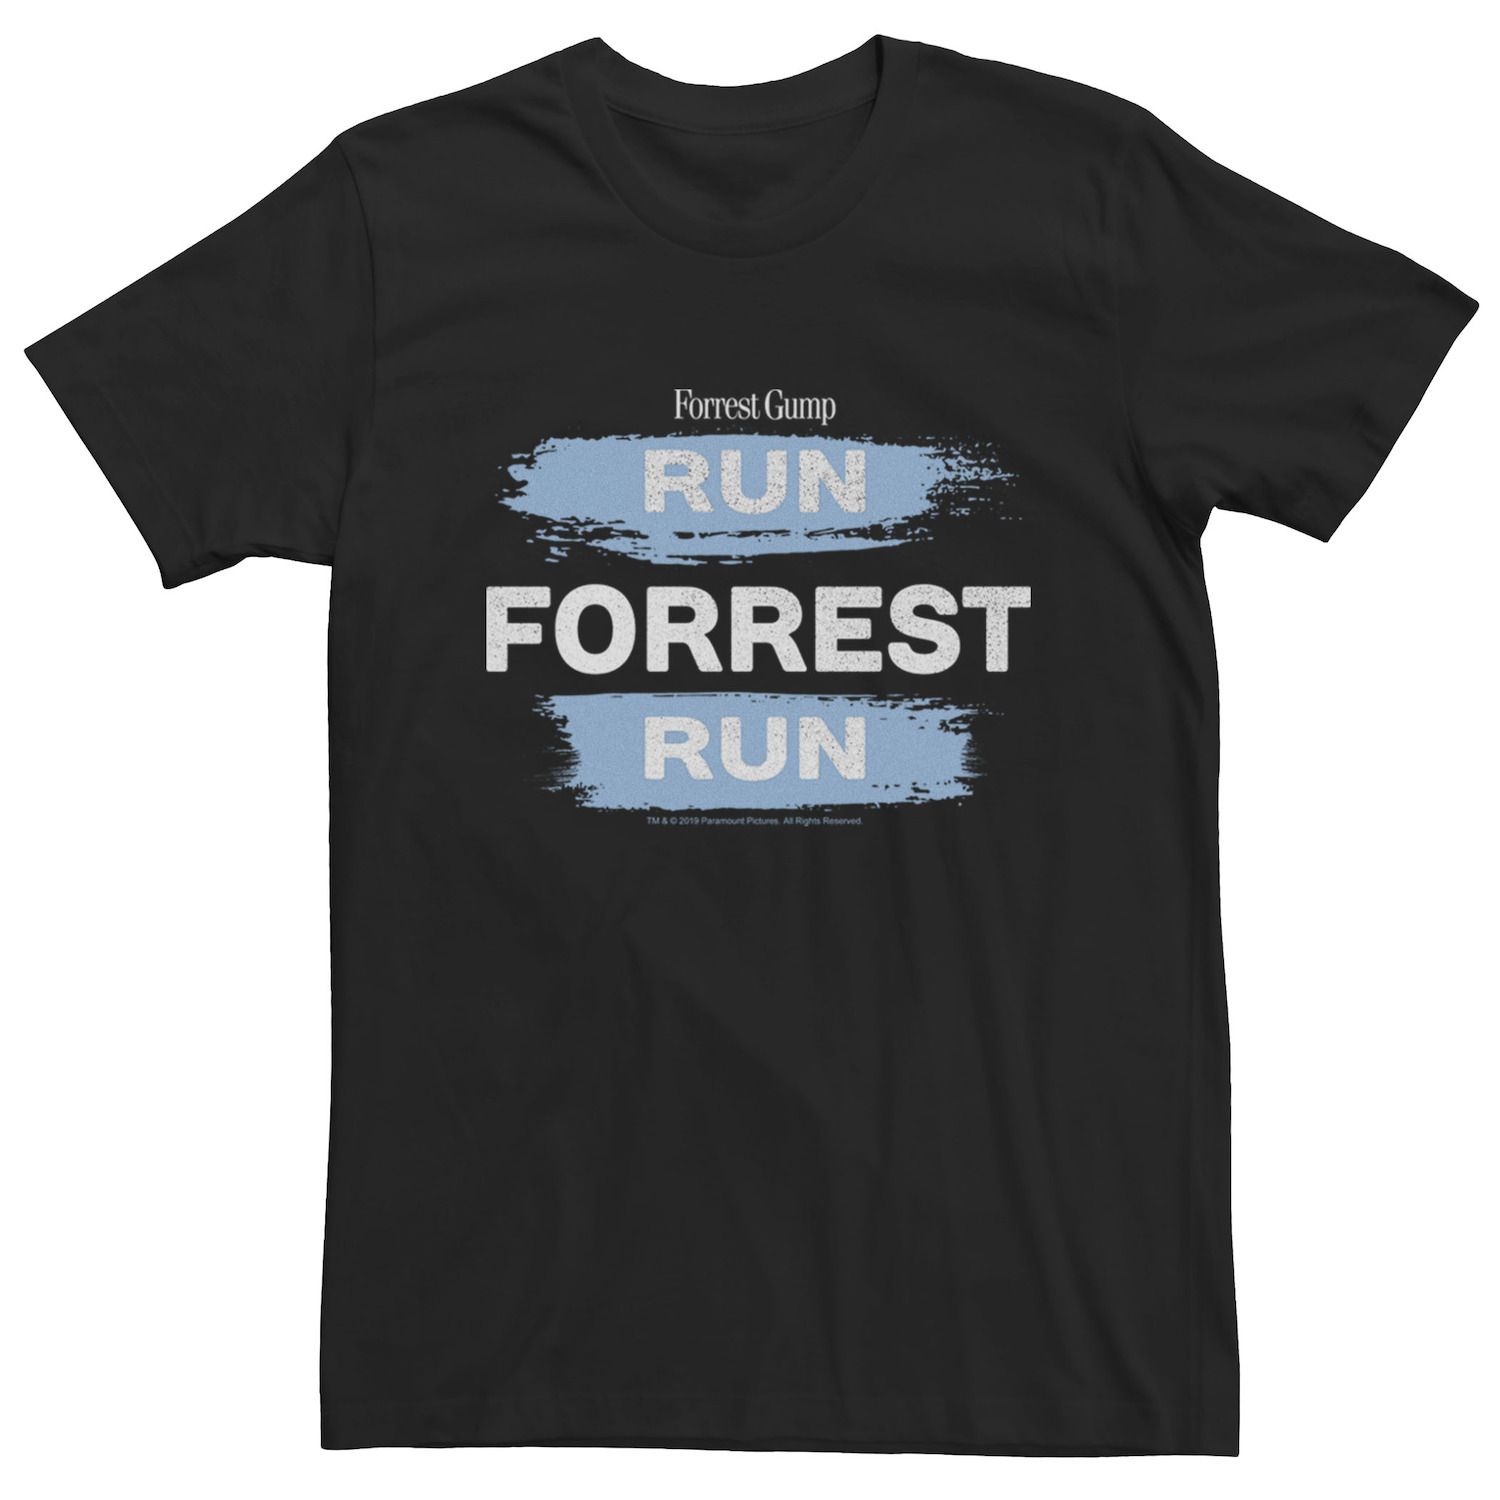 Мужская футболка Forrest Gump Run Forrest Run Paint Swipe Licensed Character